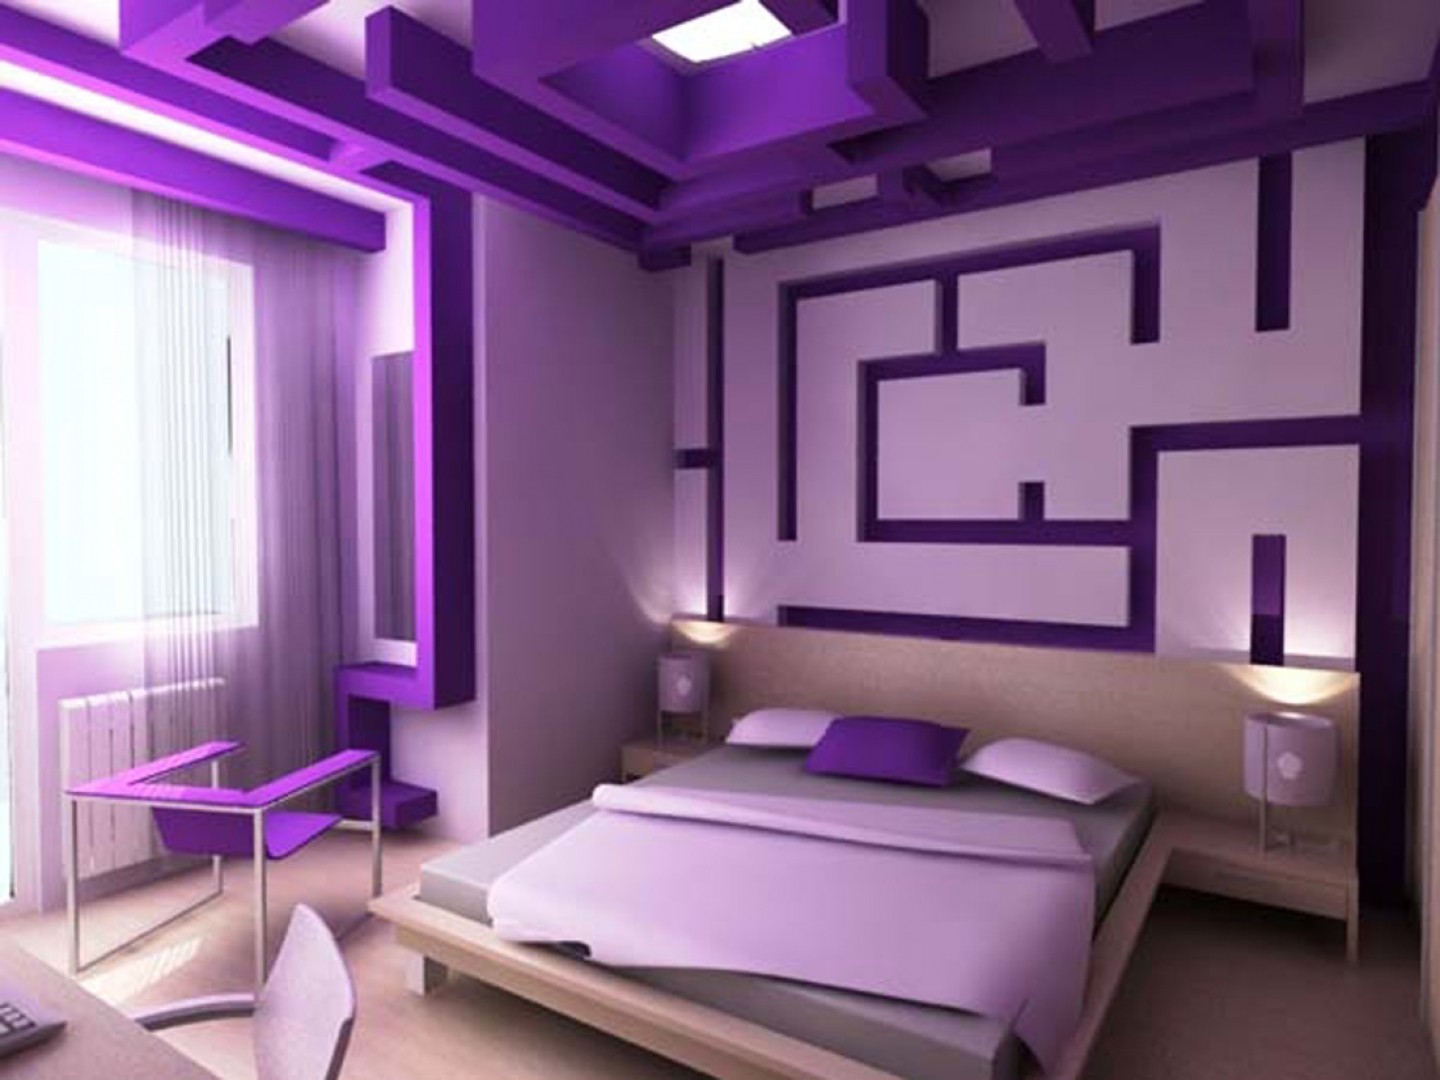   Pengaplikasian Warna Ungu untuk Kamar Tidur | Purple Interior
Design